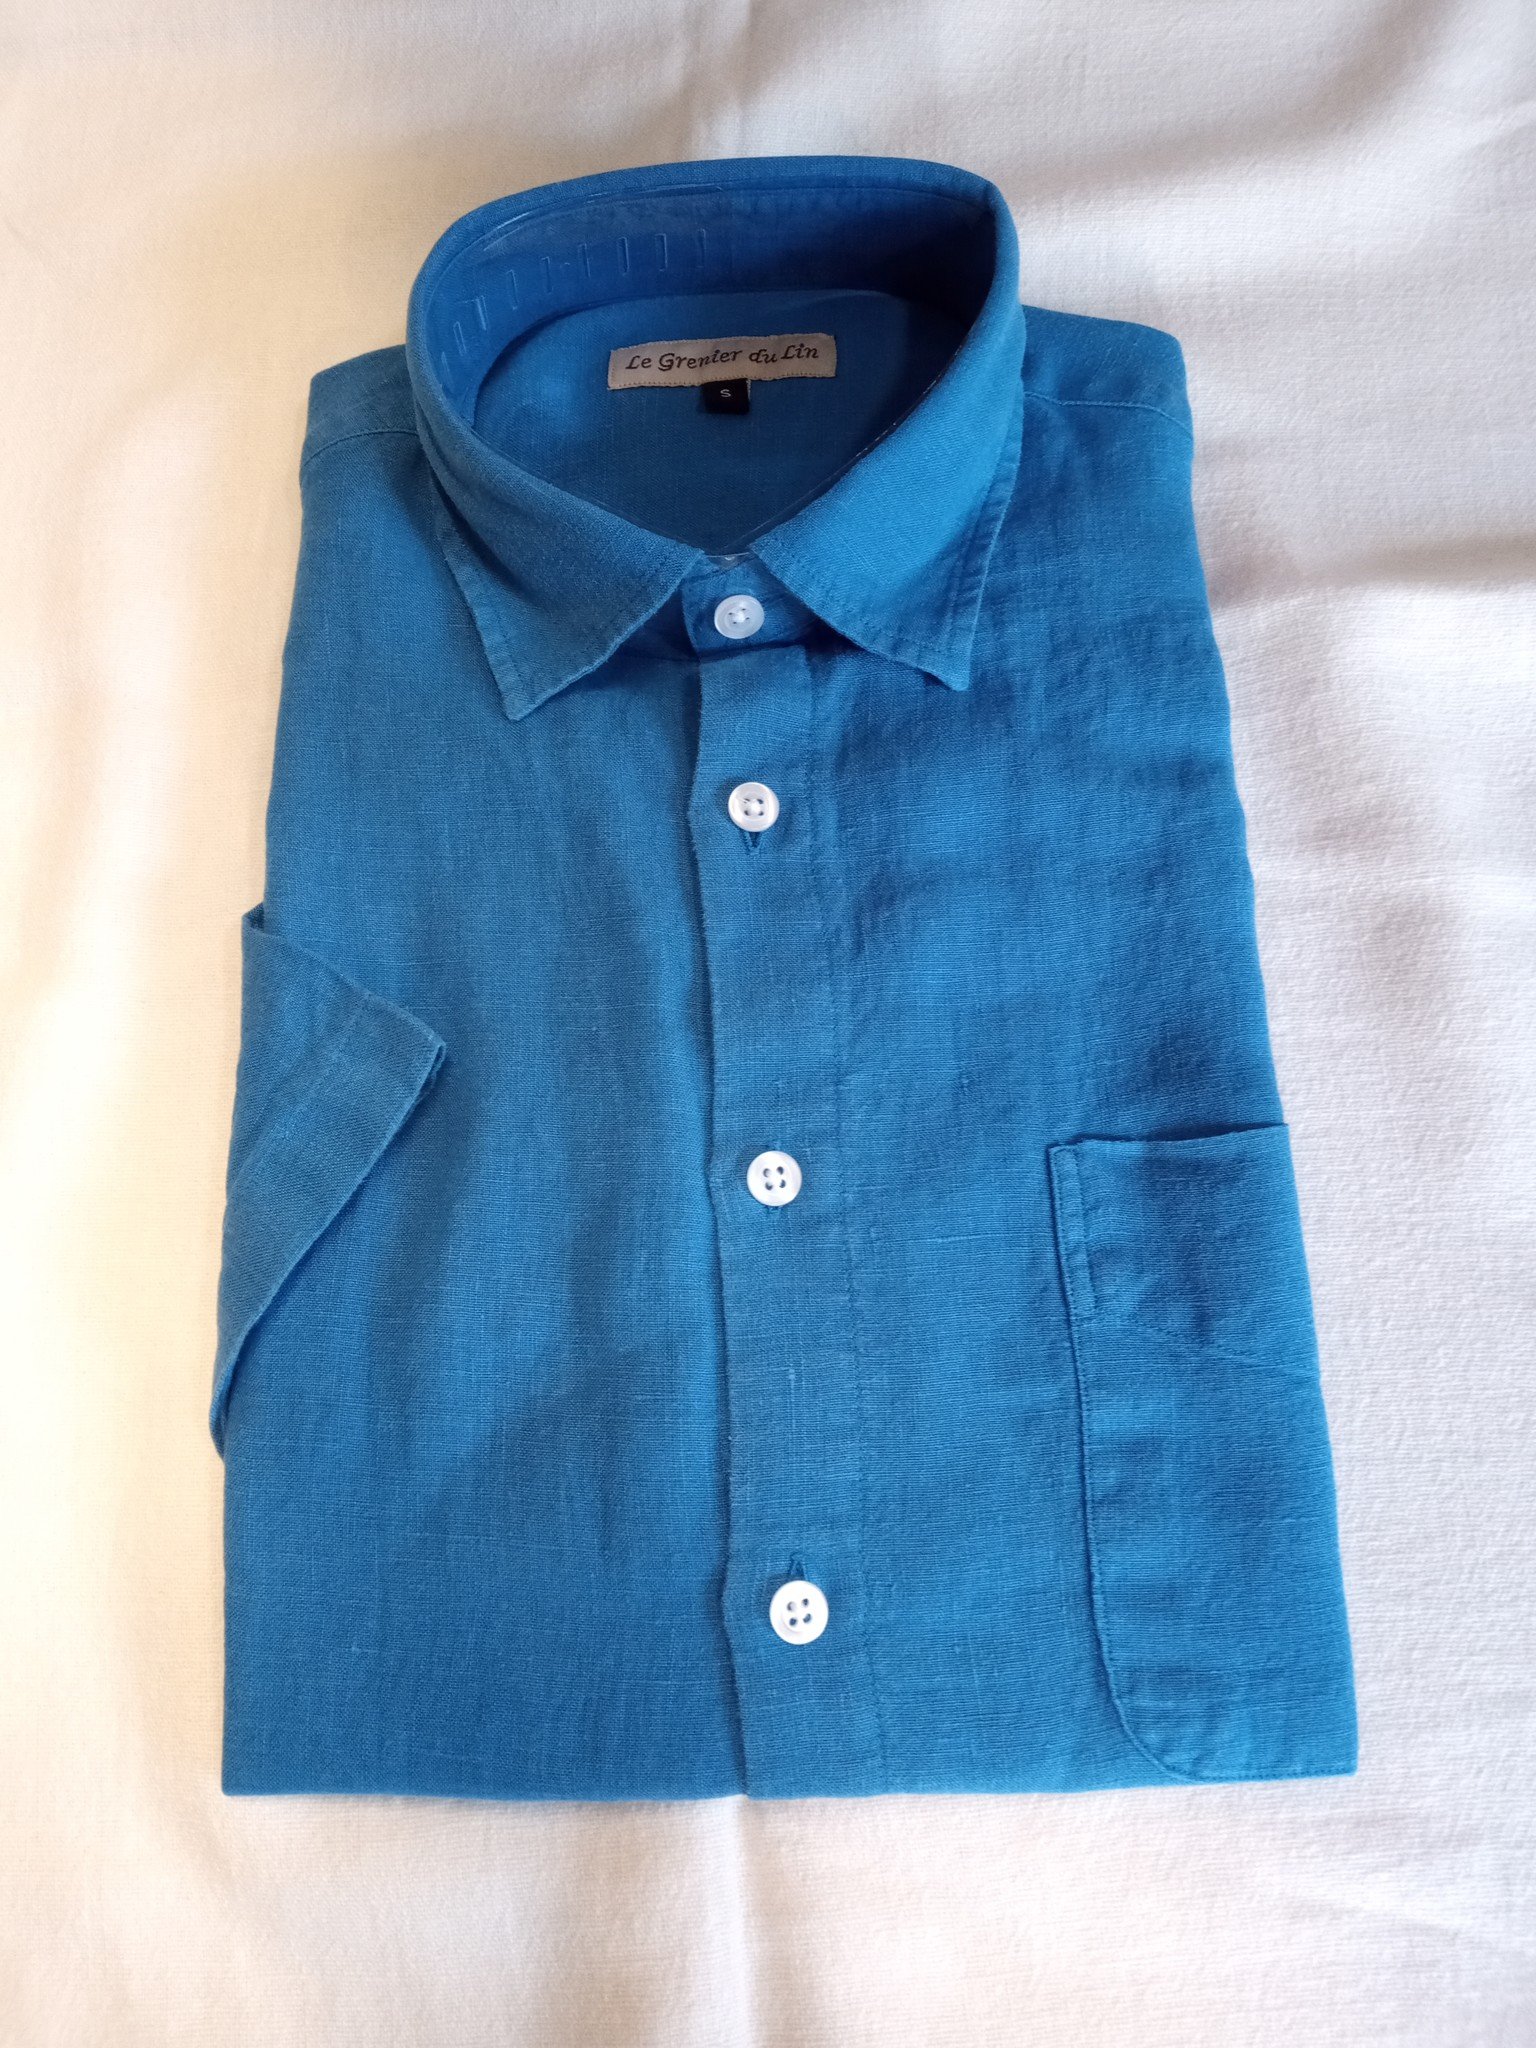 Le grenier du lin Tropical blue short sleeve linen shirt